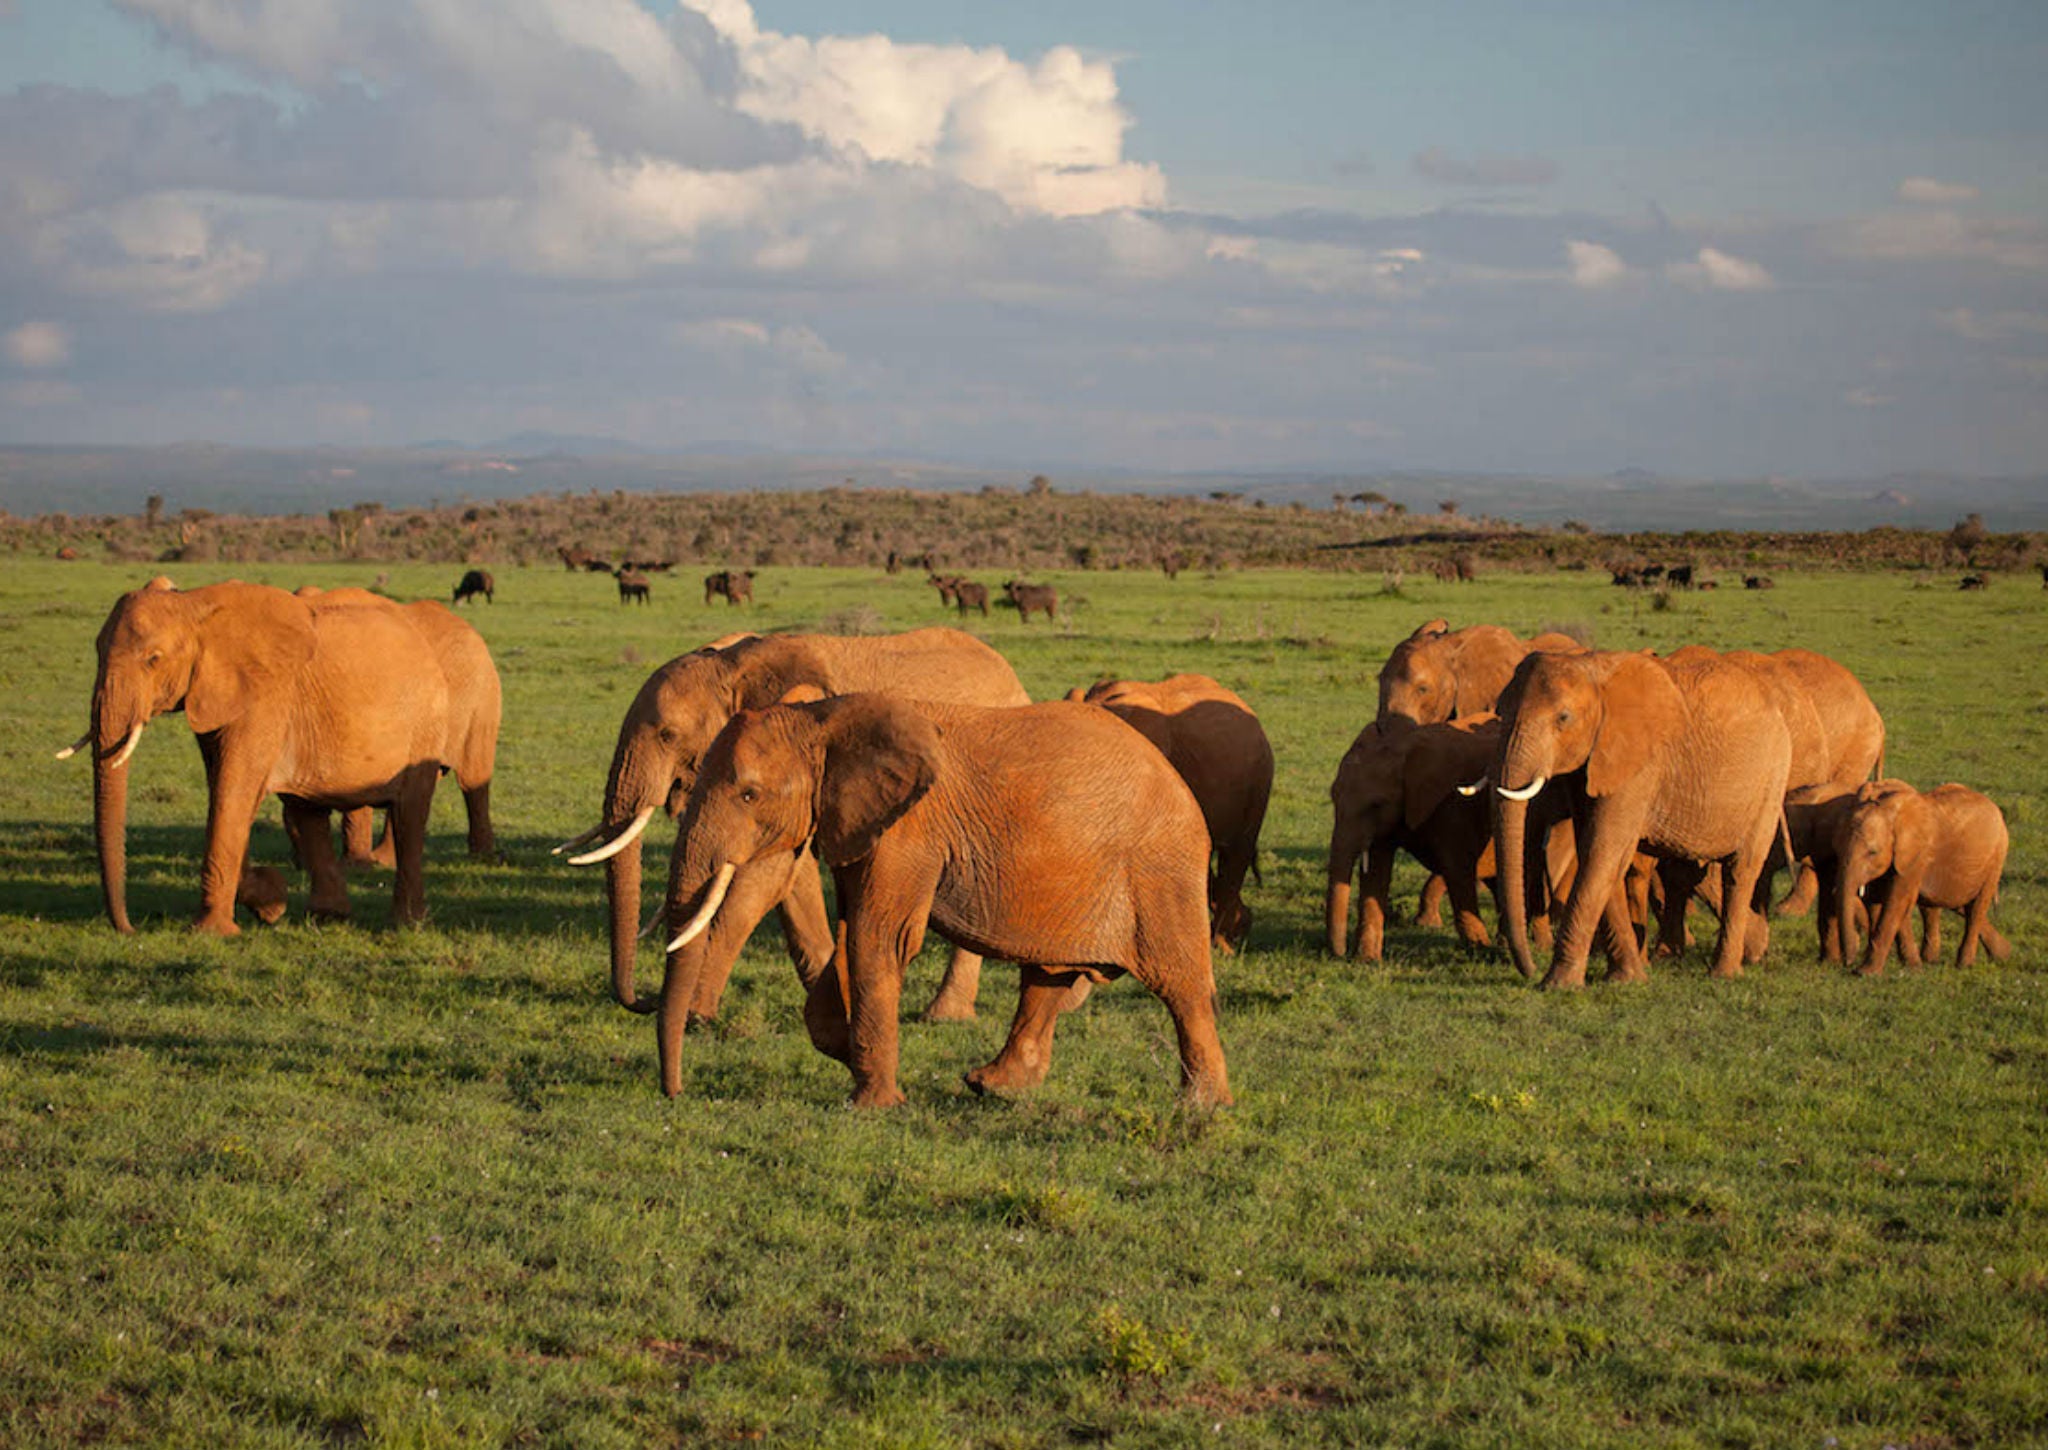 A herd of elephants walks across a Kenyan plain